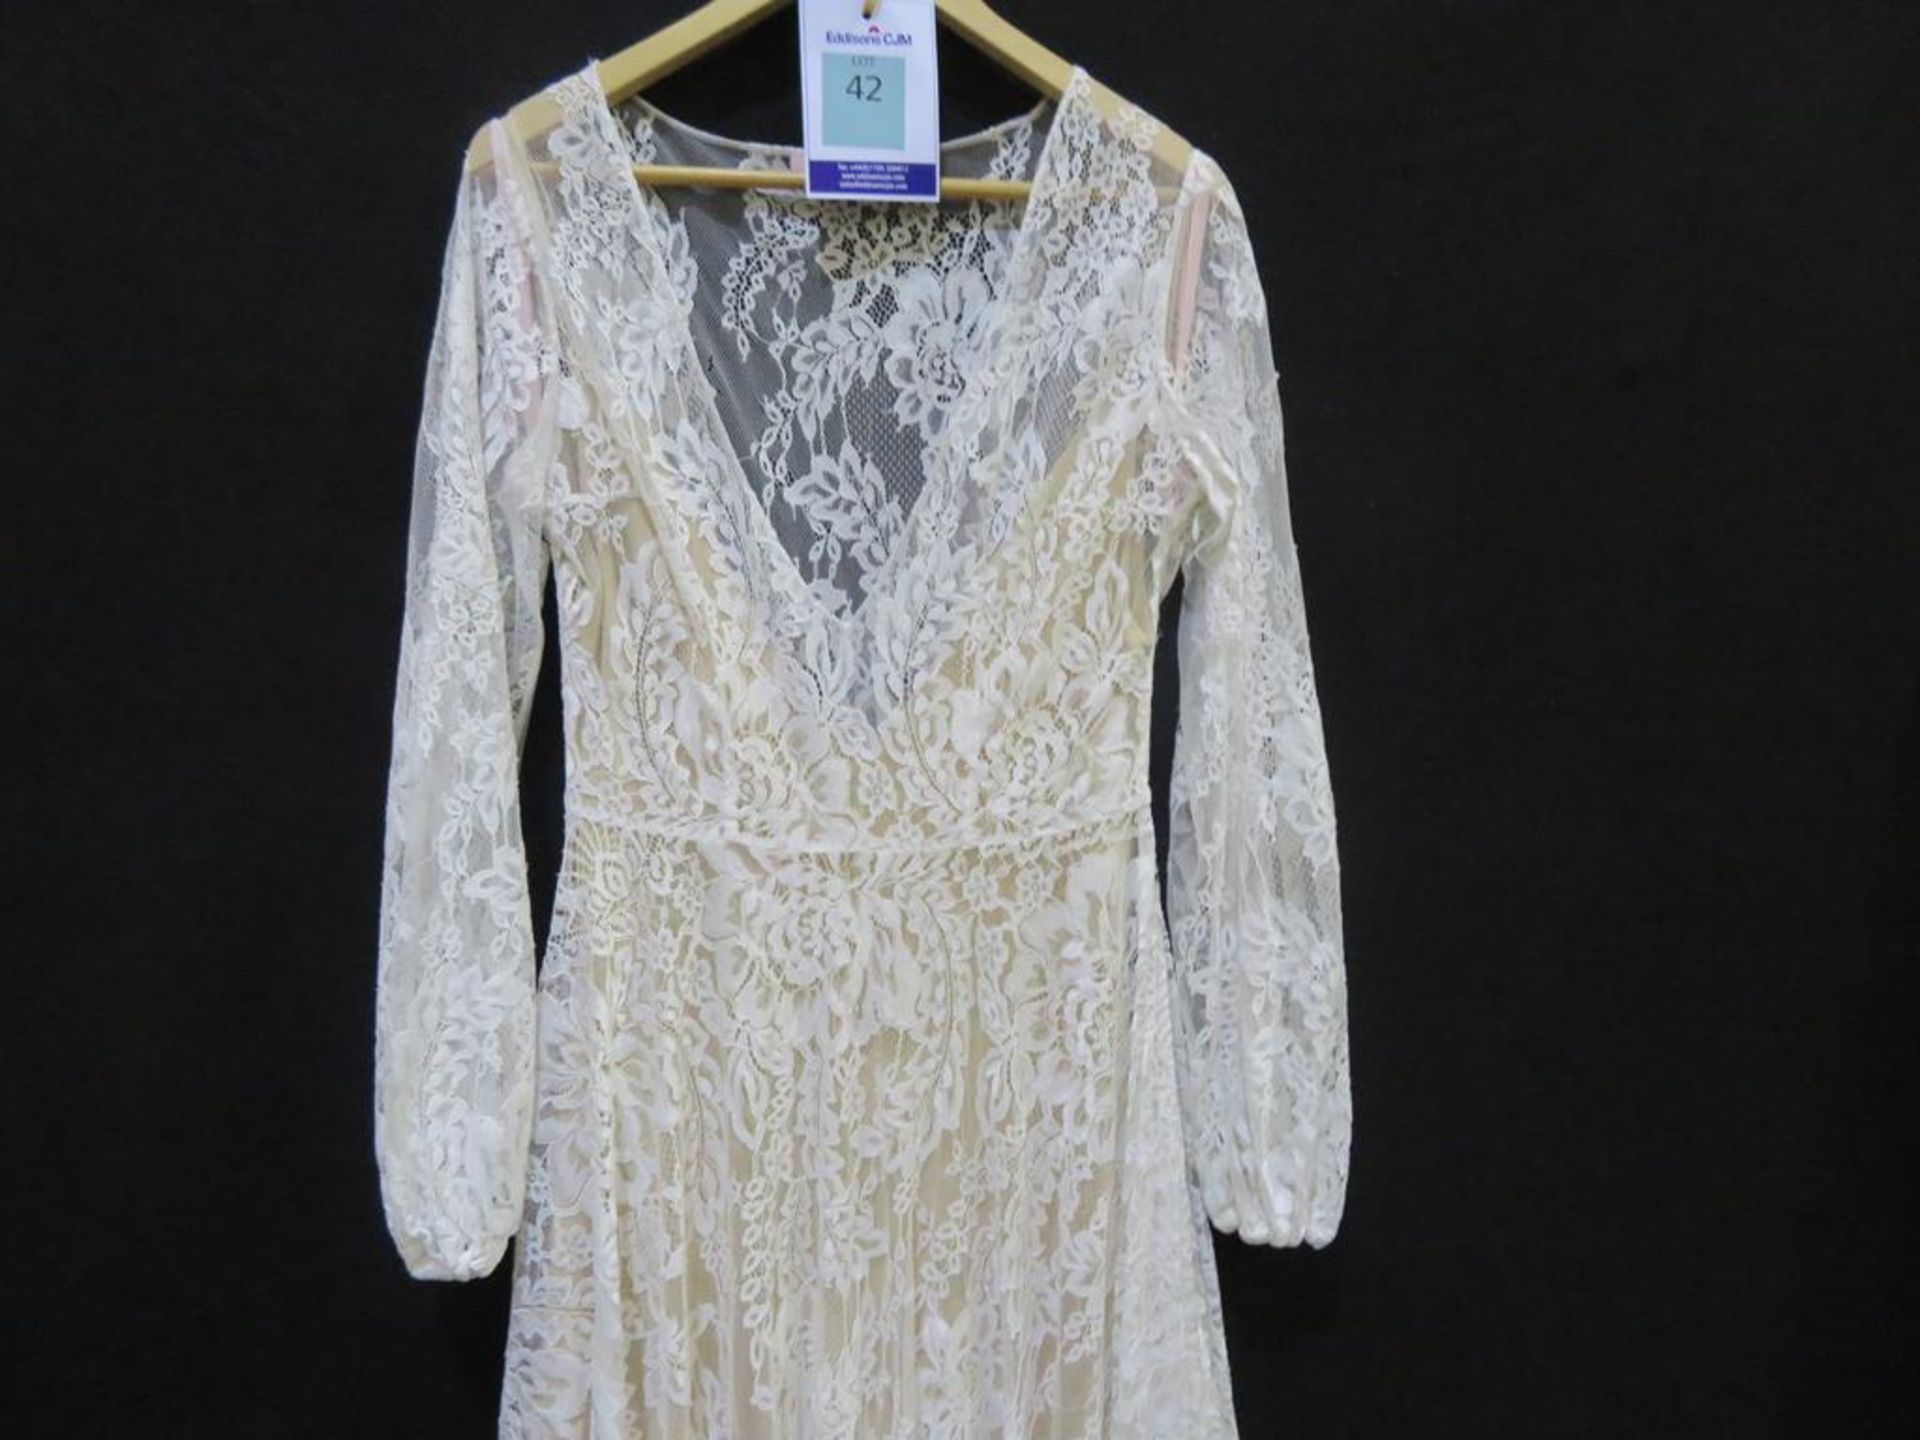 Chosen Lace wedding dress - Image 2 of 11